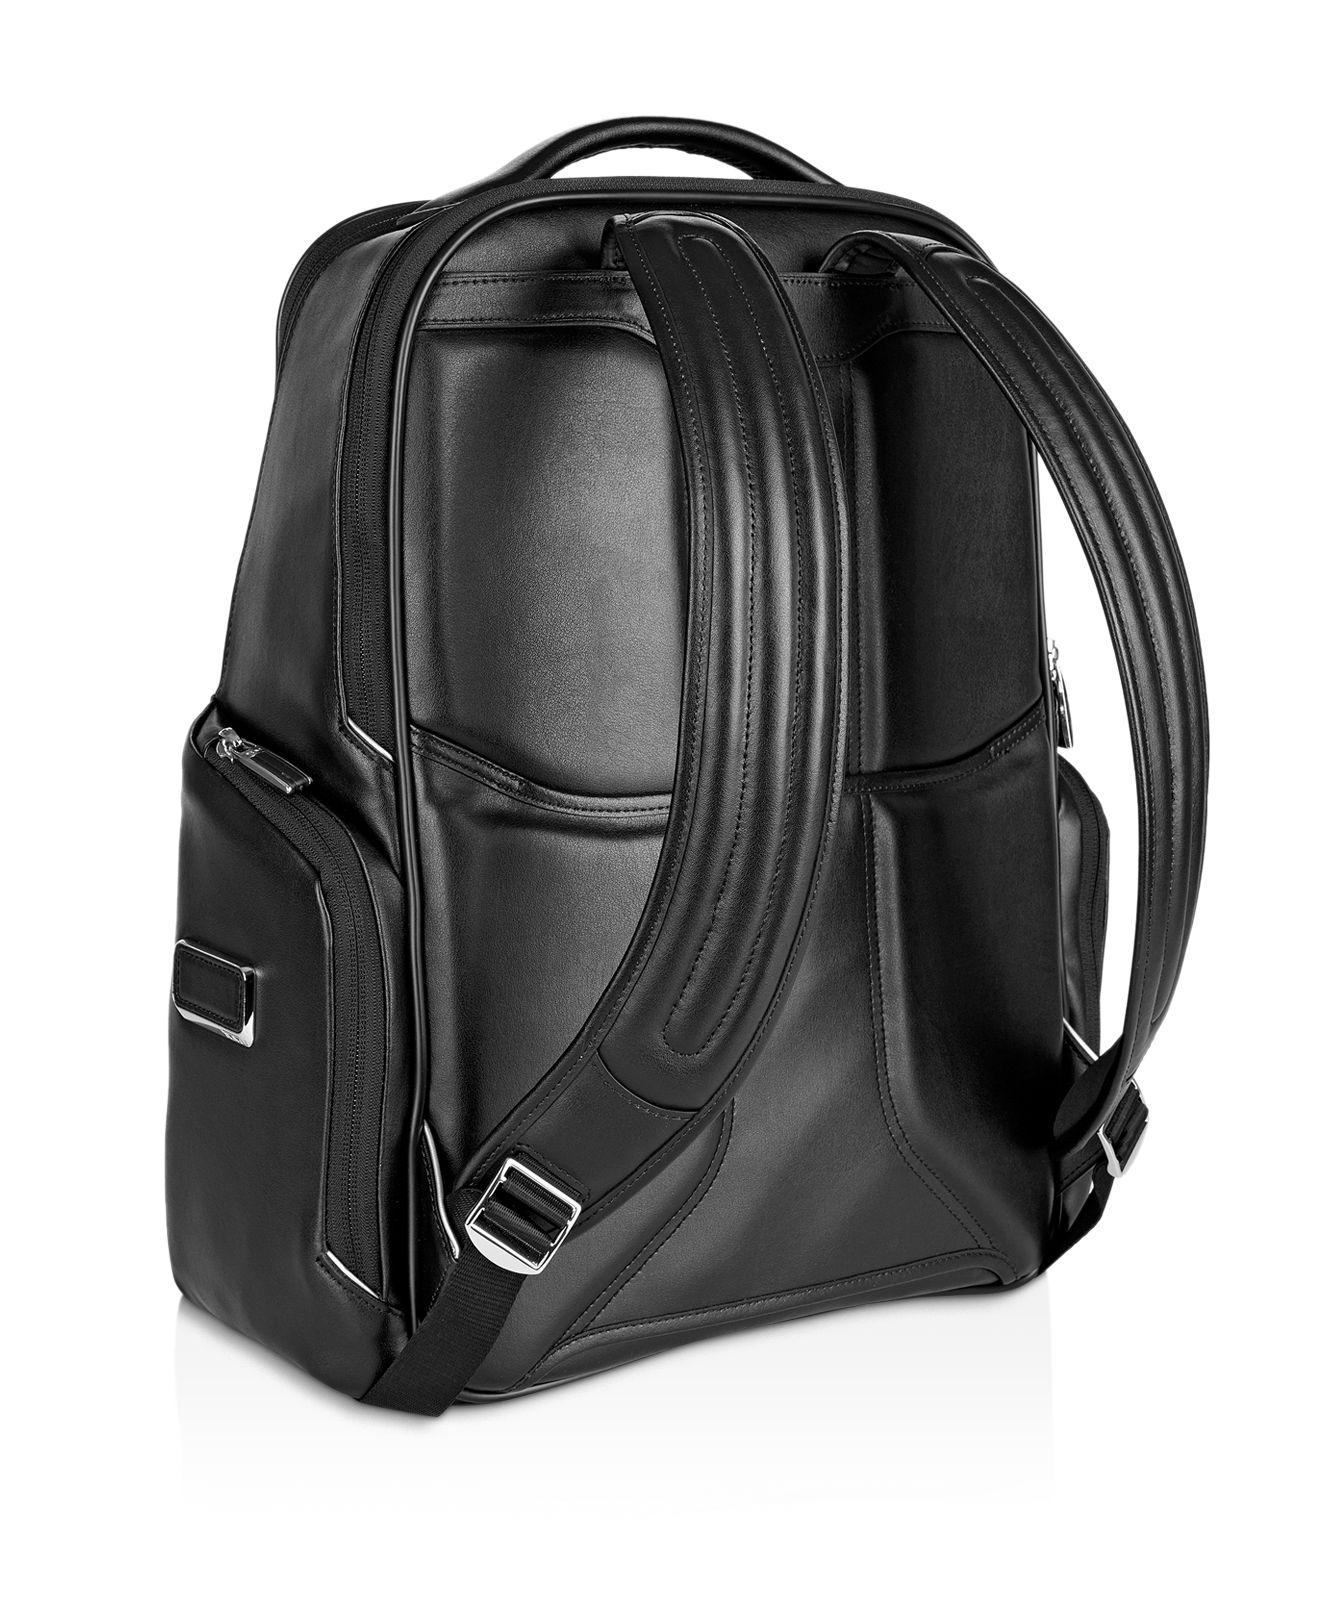 Lyst - Tumi Arrivé Bradley Leather Backpack in Black for Men